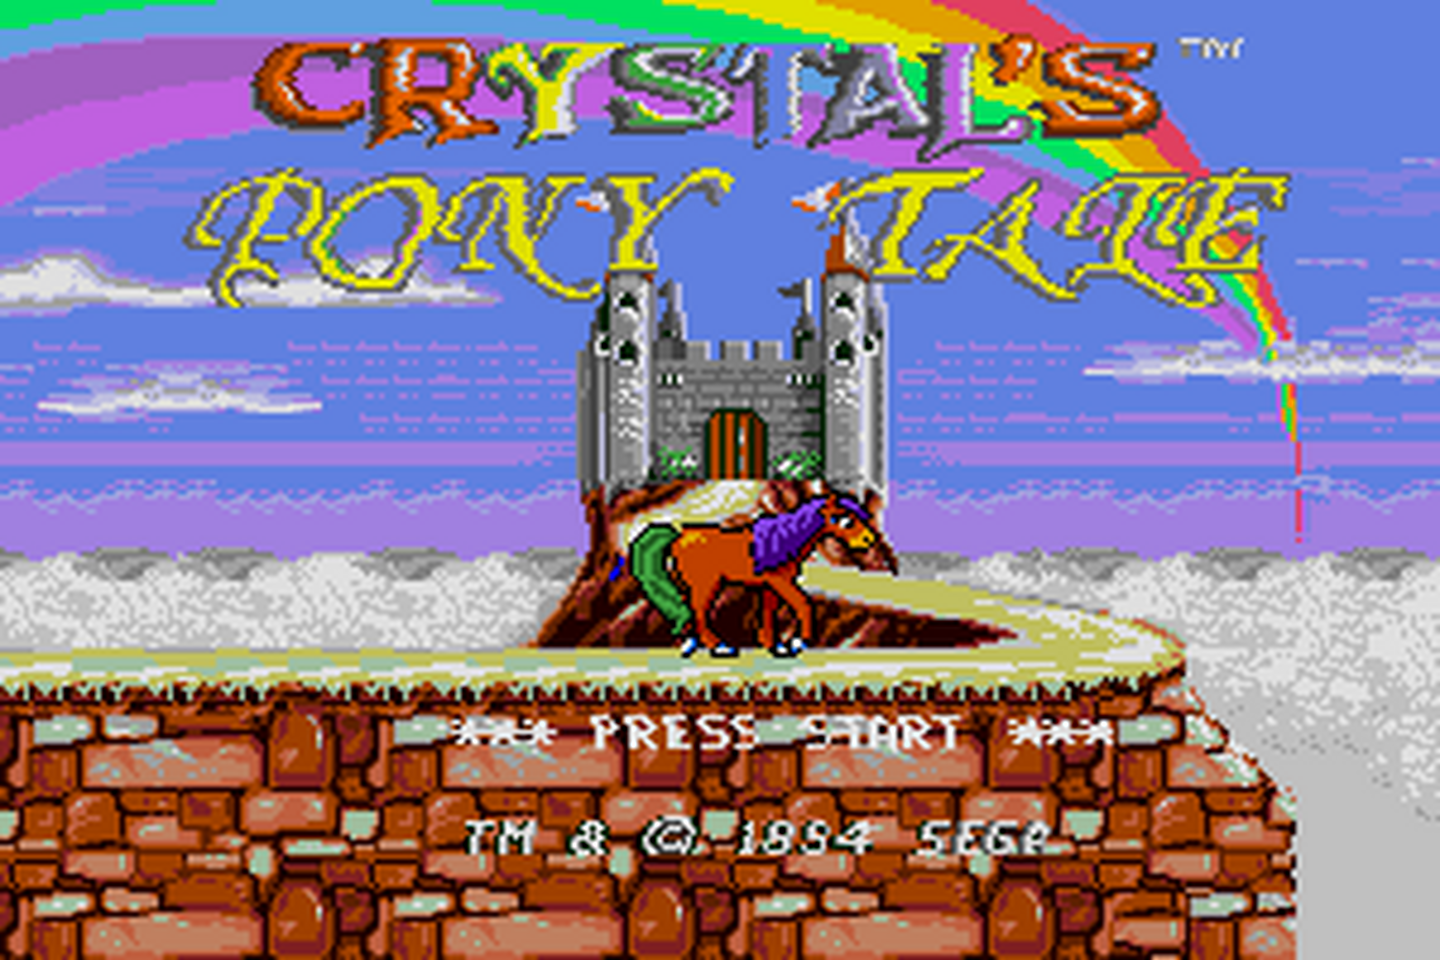 SMD GameBase Crystal's_Pony_Tale SEGA_Enterprises_Ltd. 1994